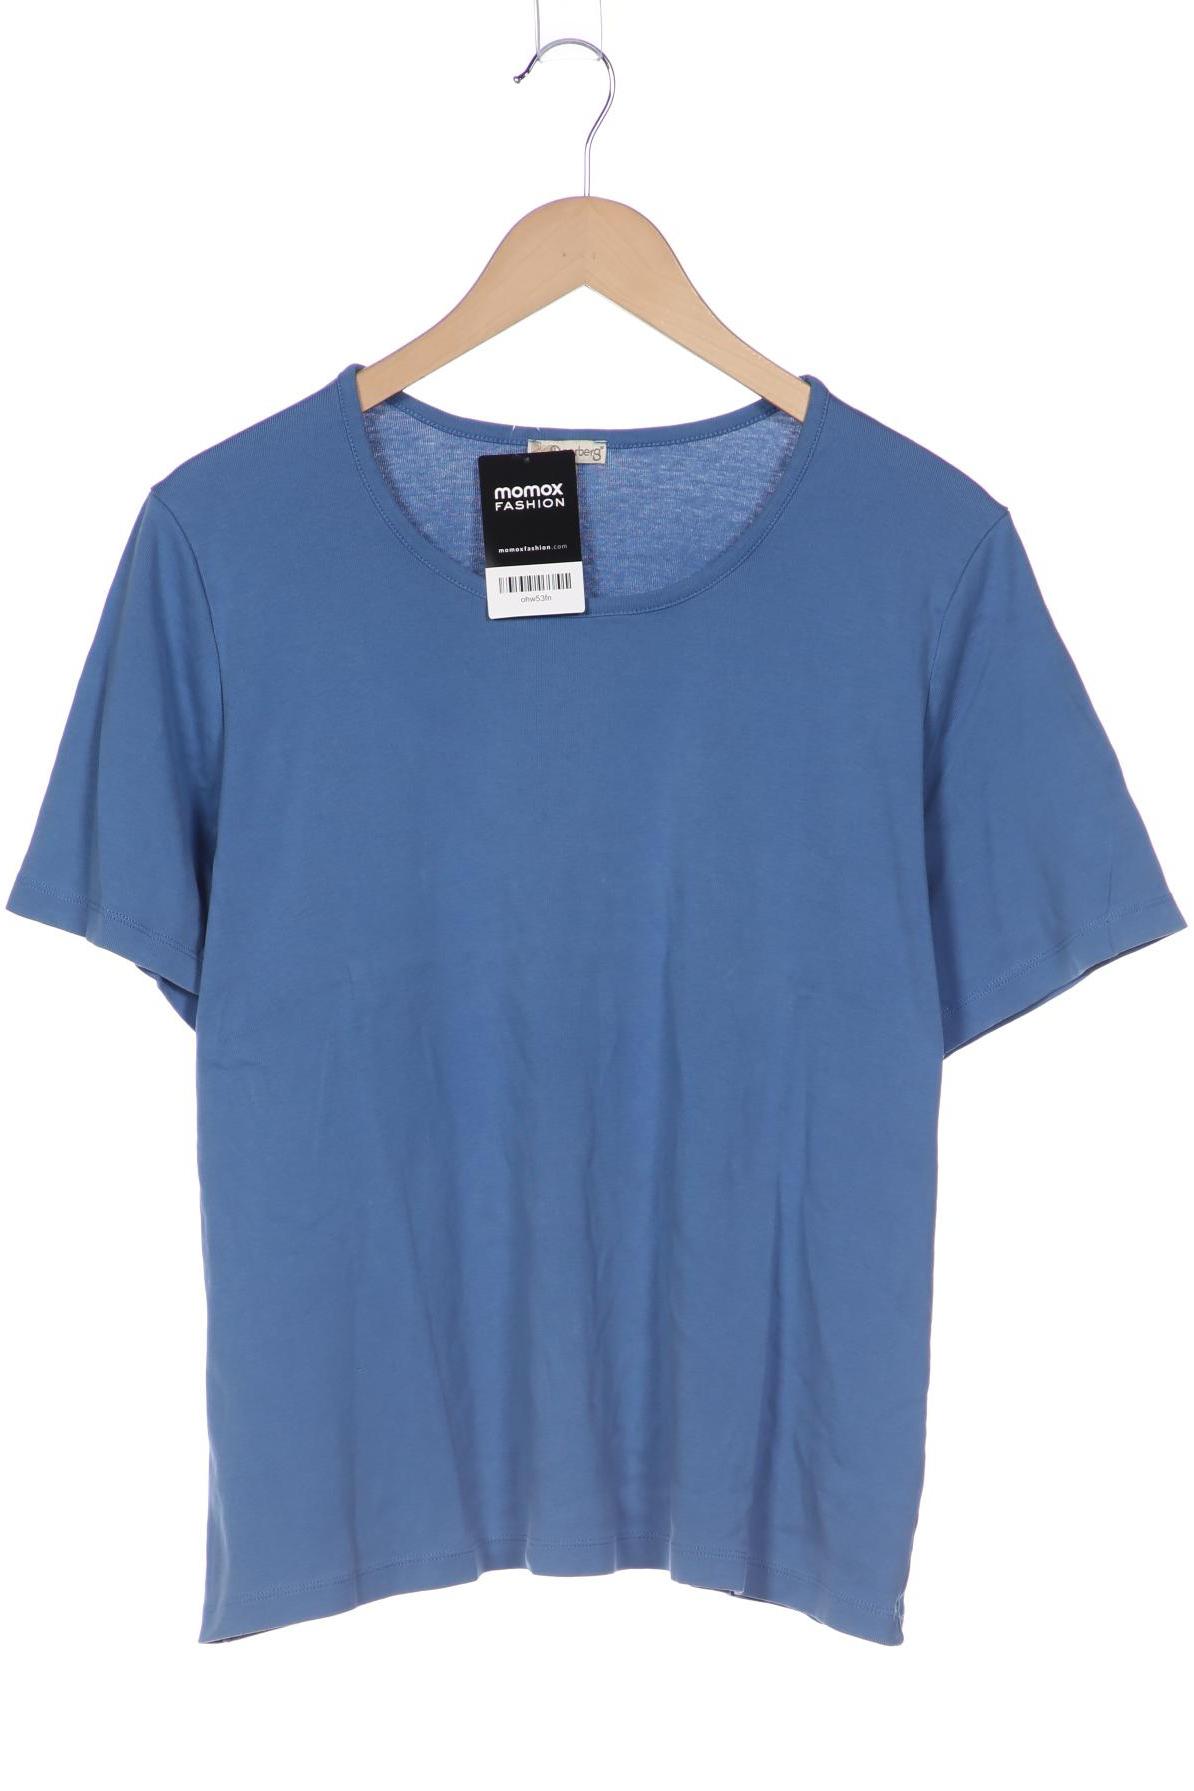 Deerberg Damen T-Shirt, blau, Gr. 44 von Deerberg